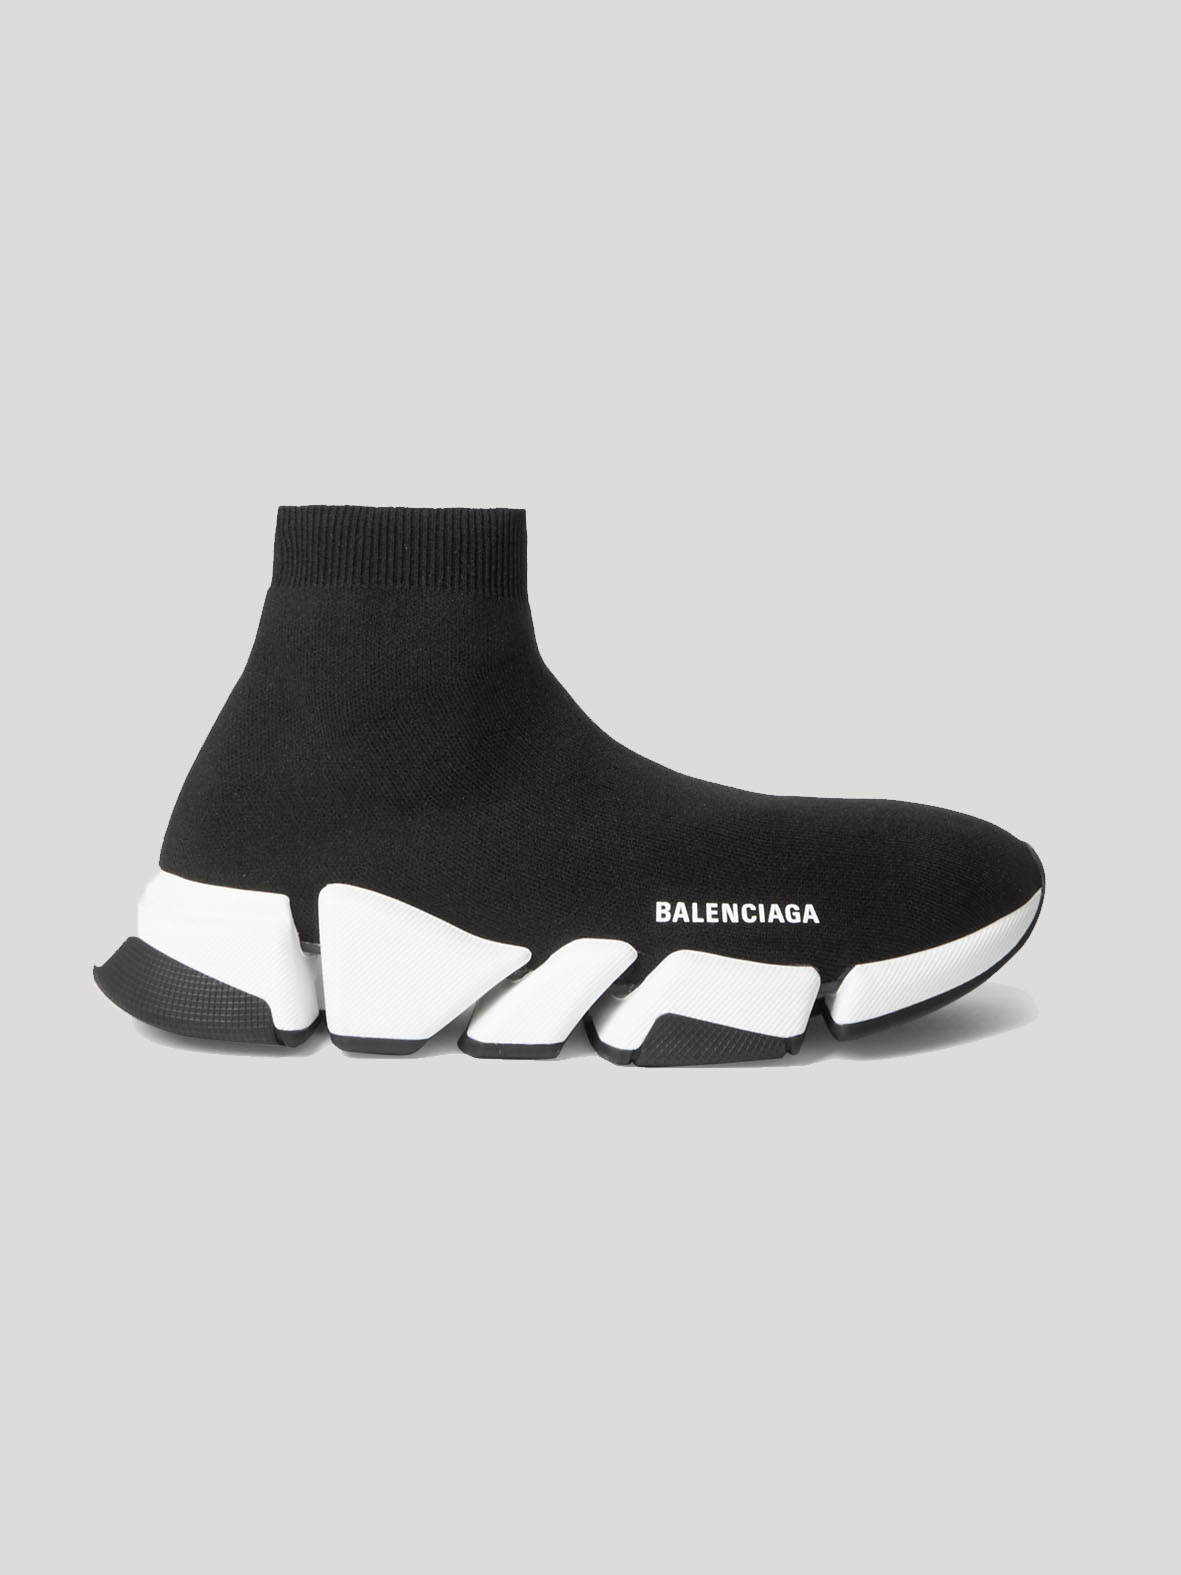 Balenciaga Speed 2.0 Sneakers - Kicks Galeria